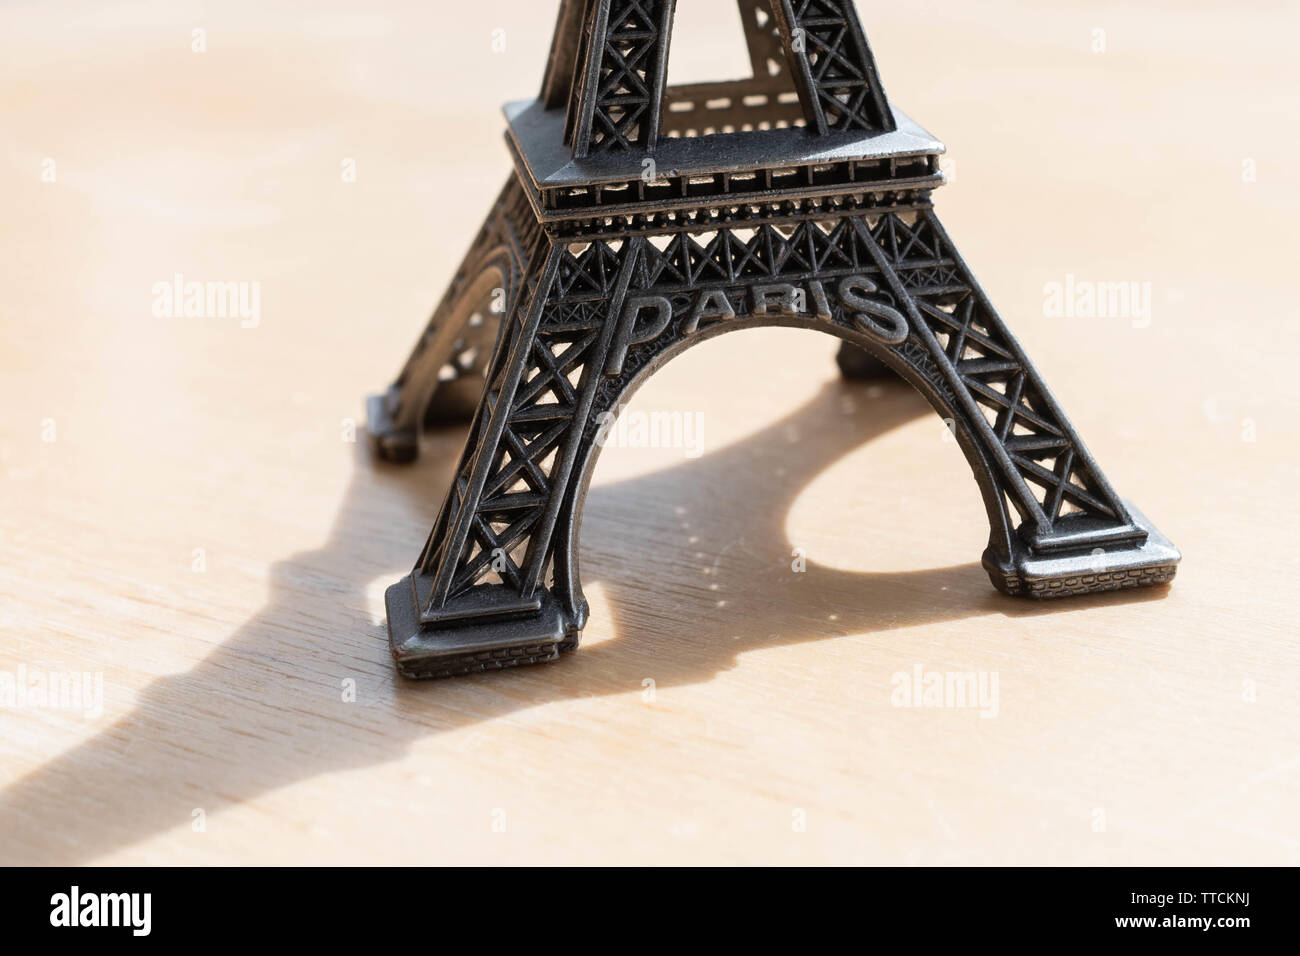 Paris souvenir of the eiffel tower Stock Photo